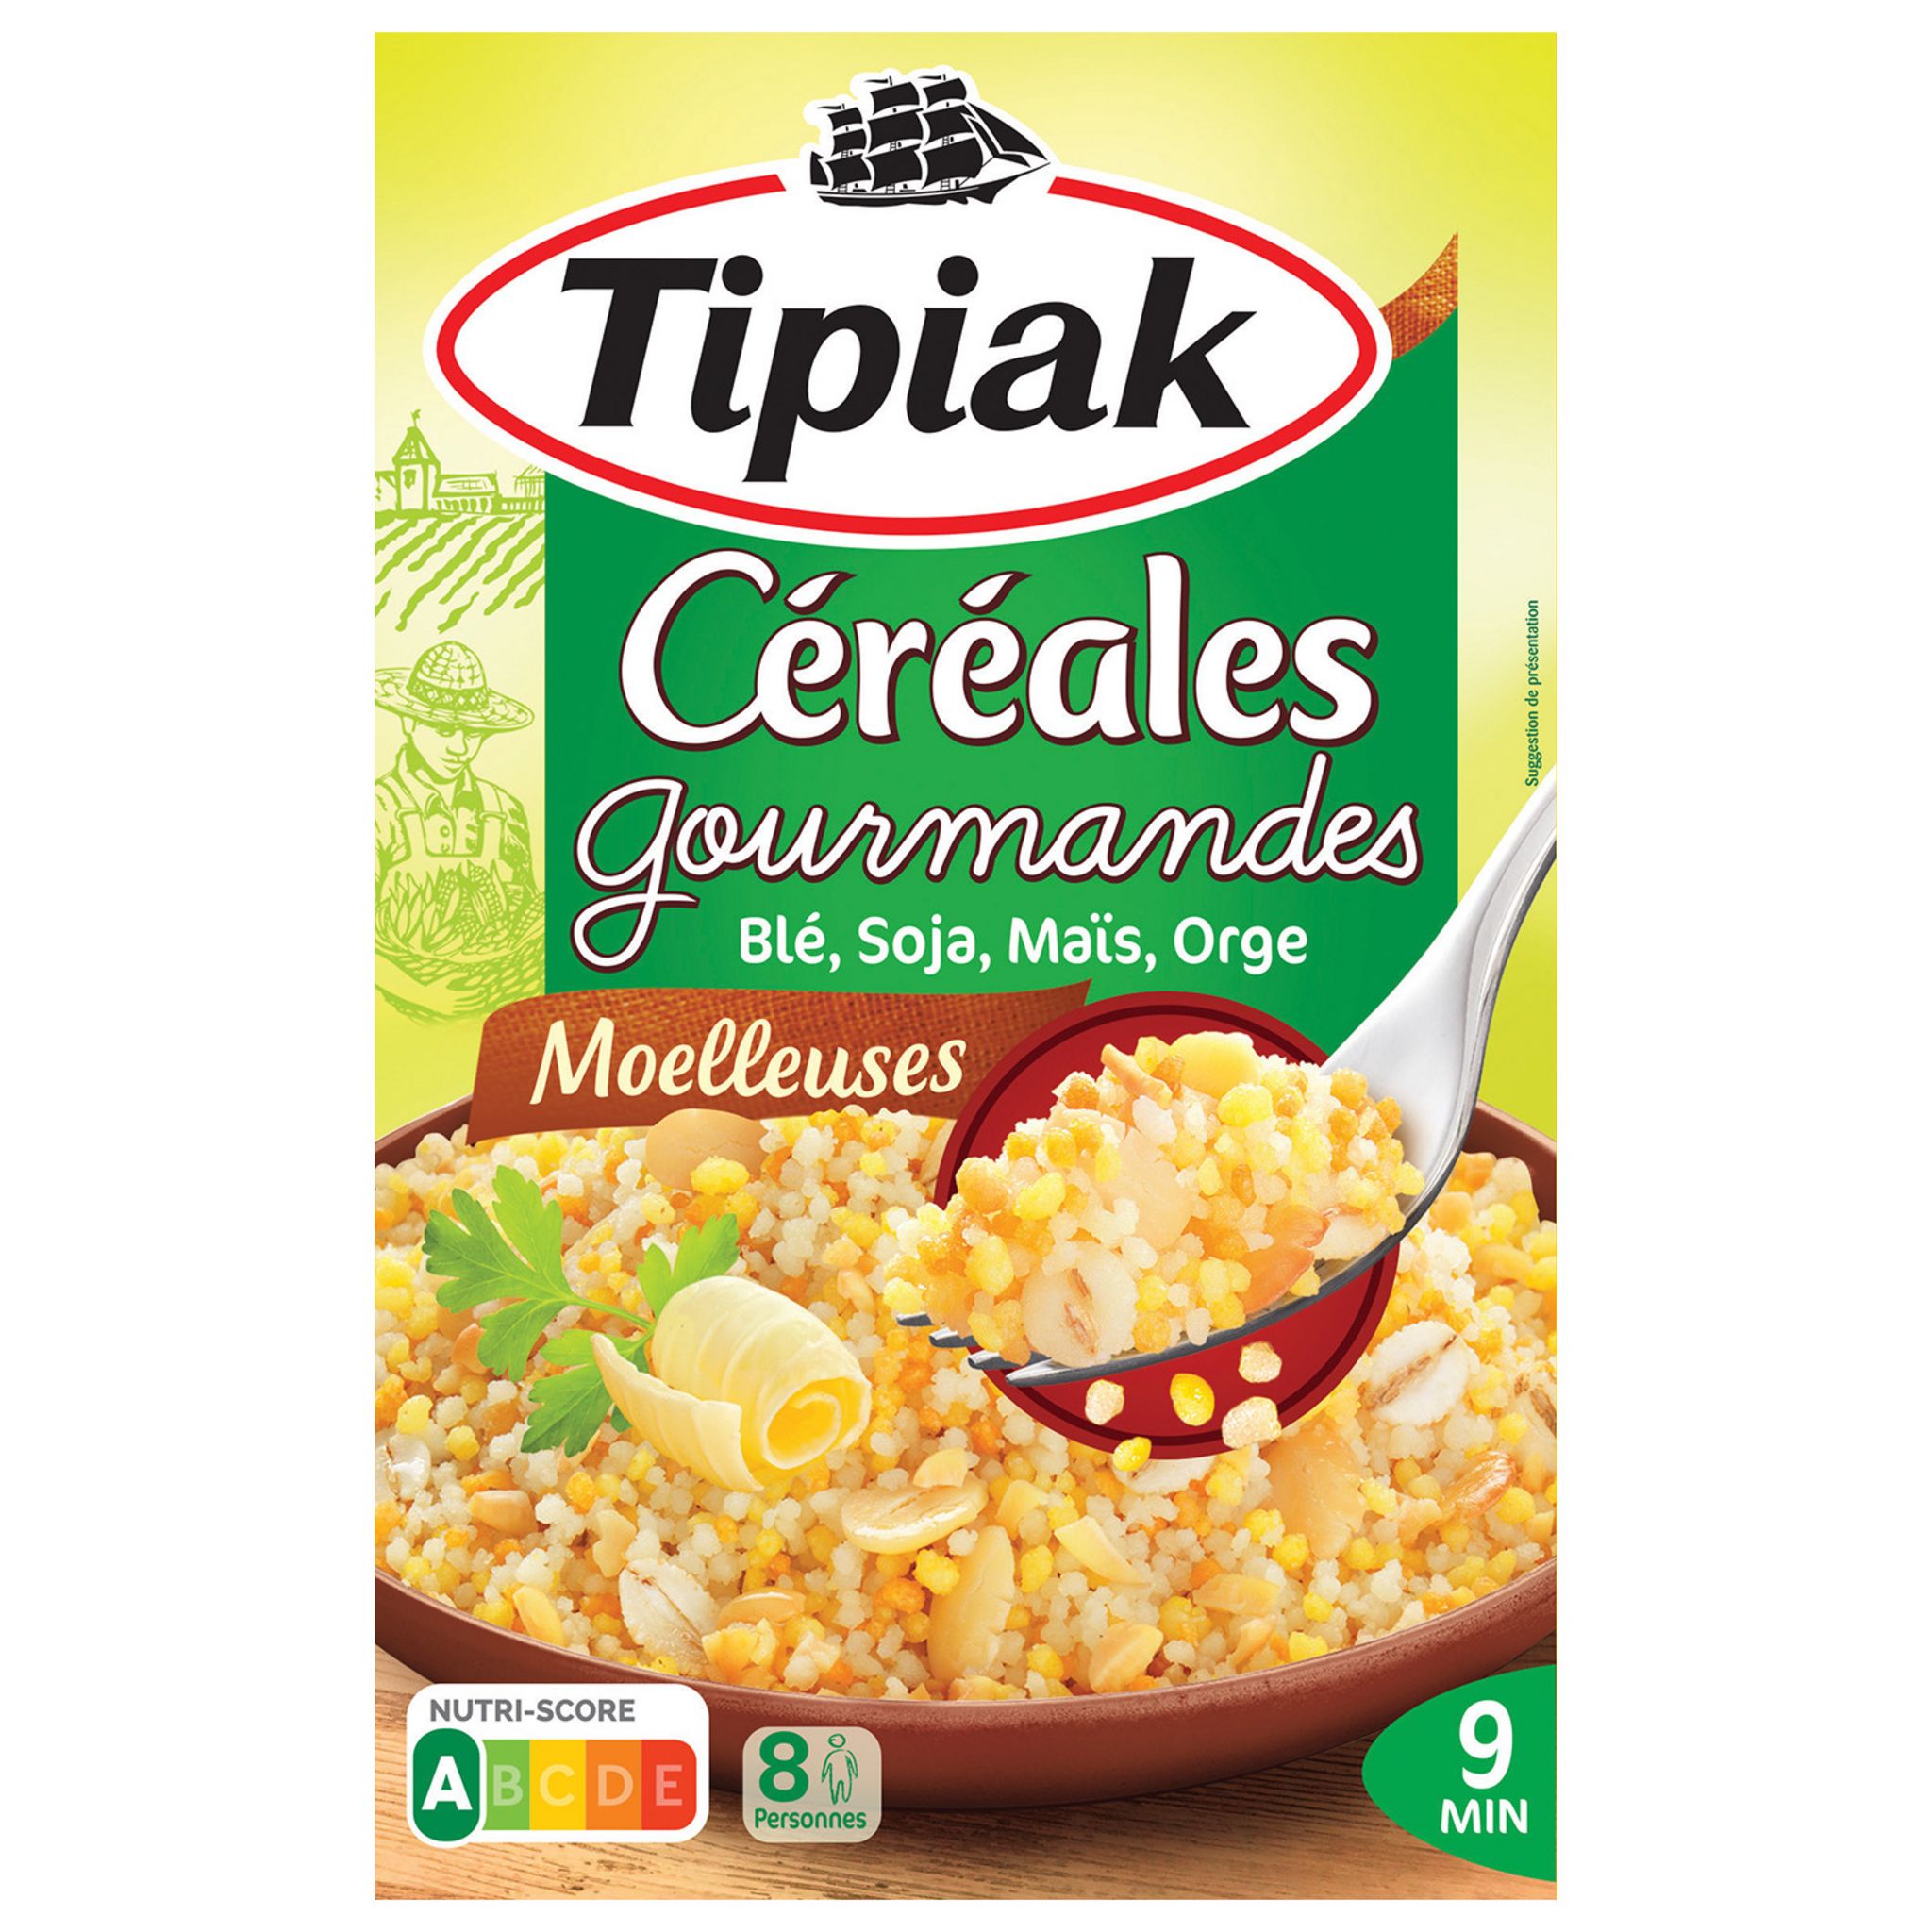 Céréales de Campagne – Tipiak